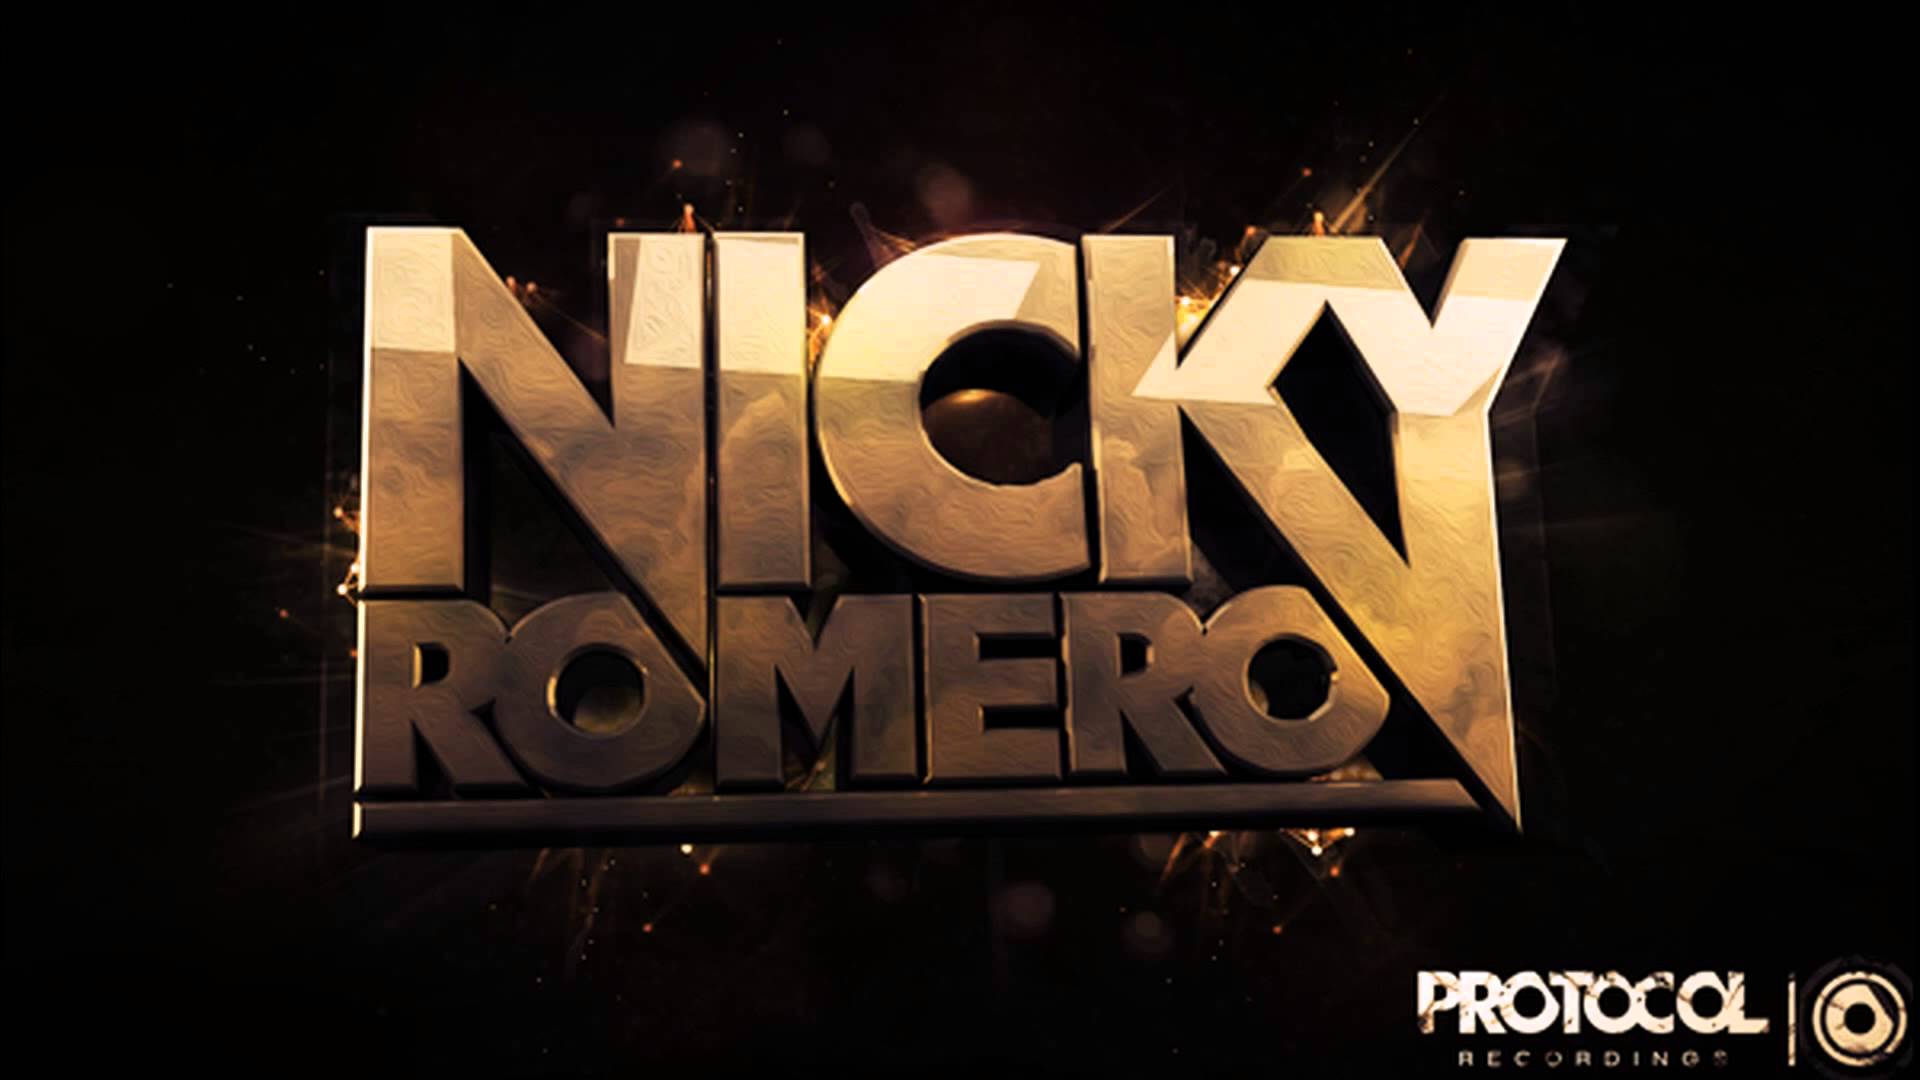 Nicky Romero Feat Krewella Legacy Protocol Recordings